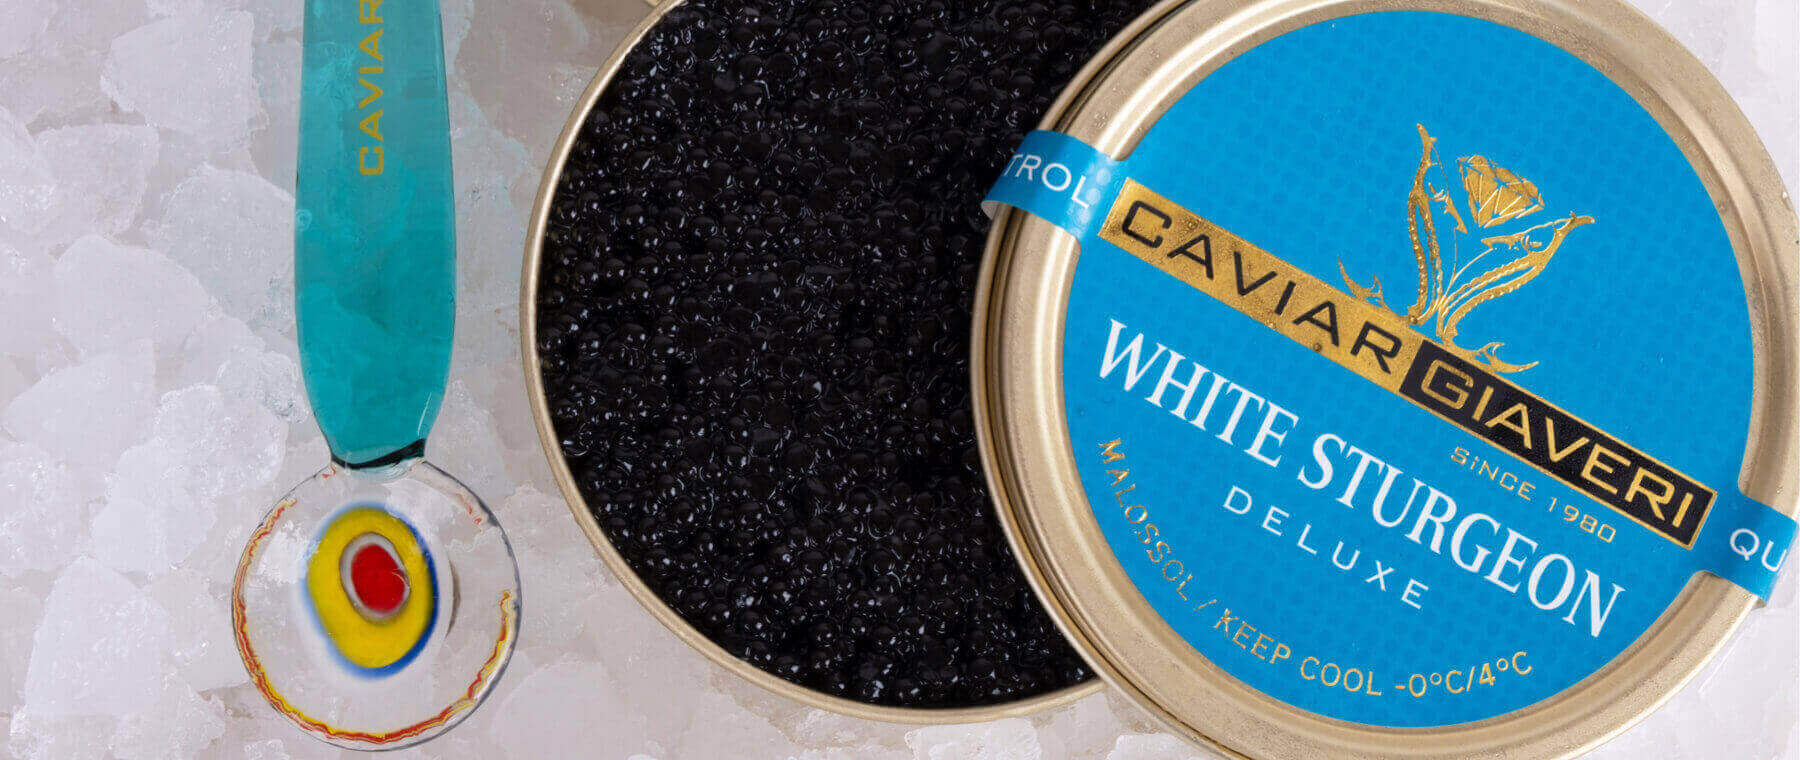 Caviale White Sturgeon Deluxe Caviar Giaveri